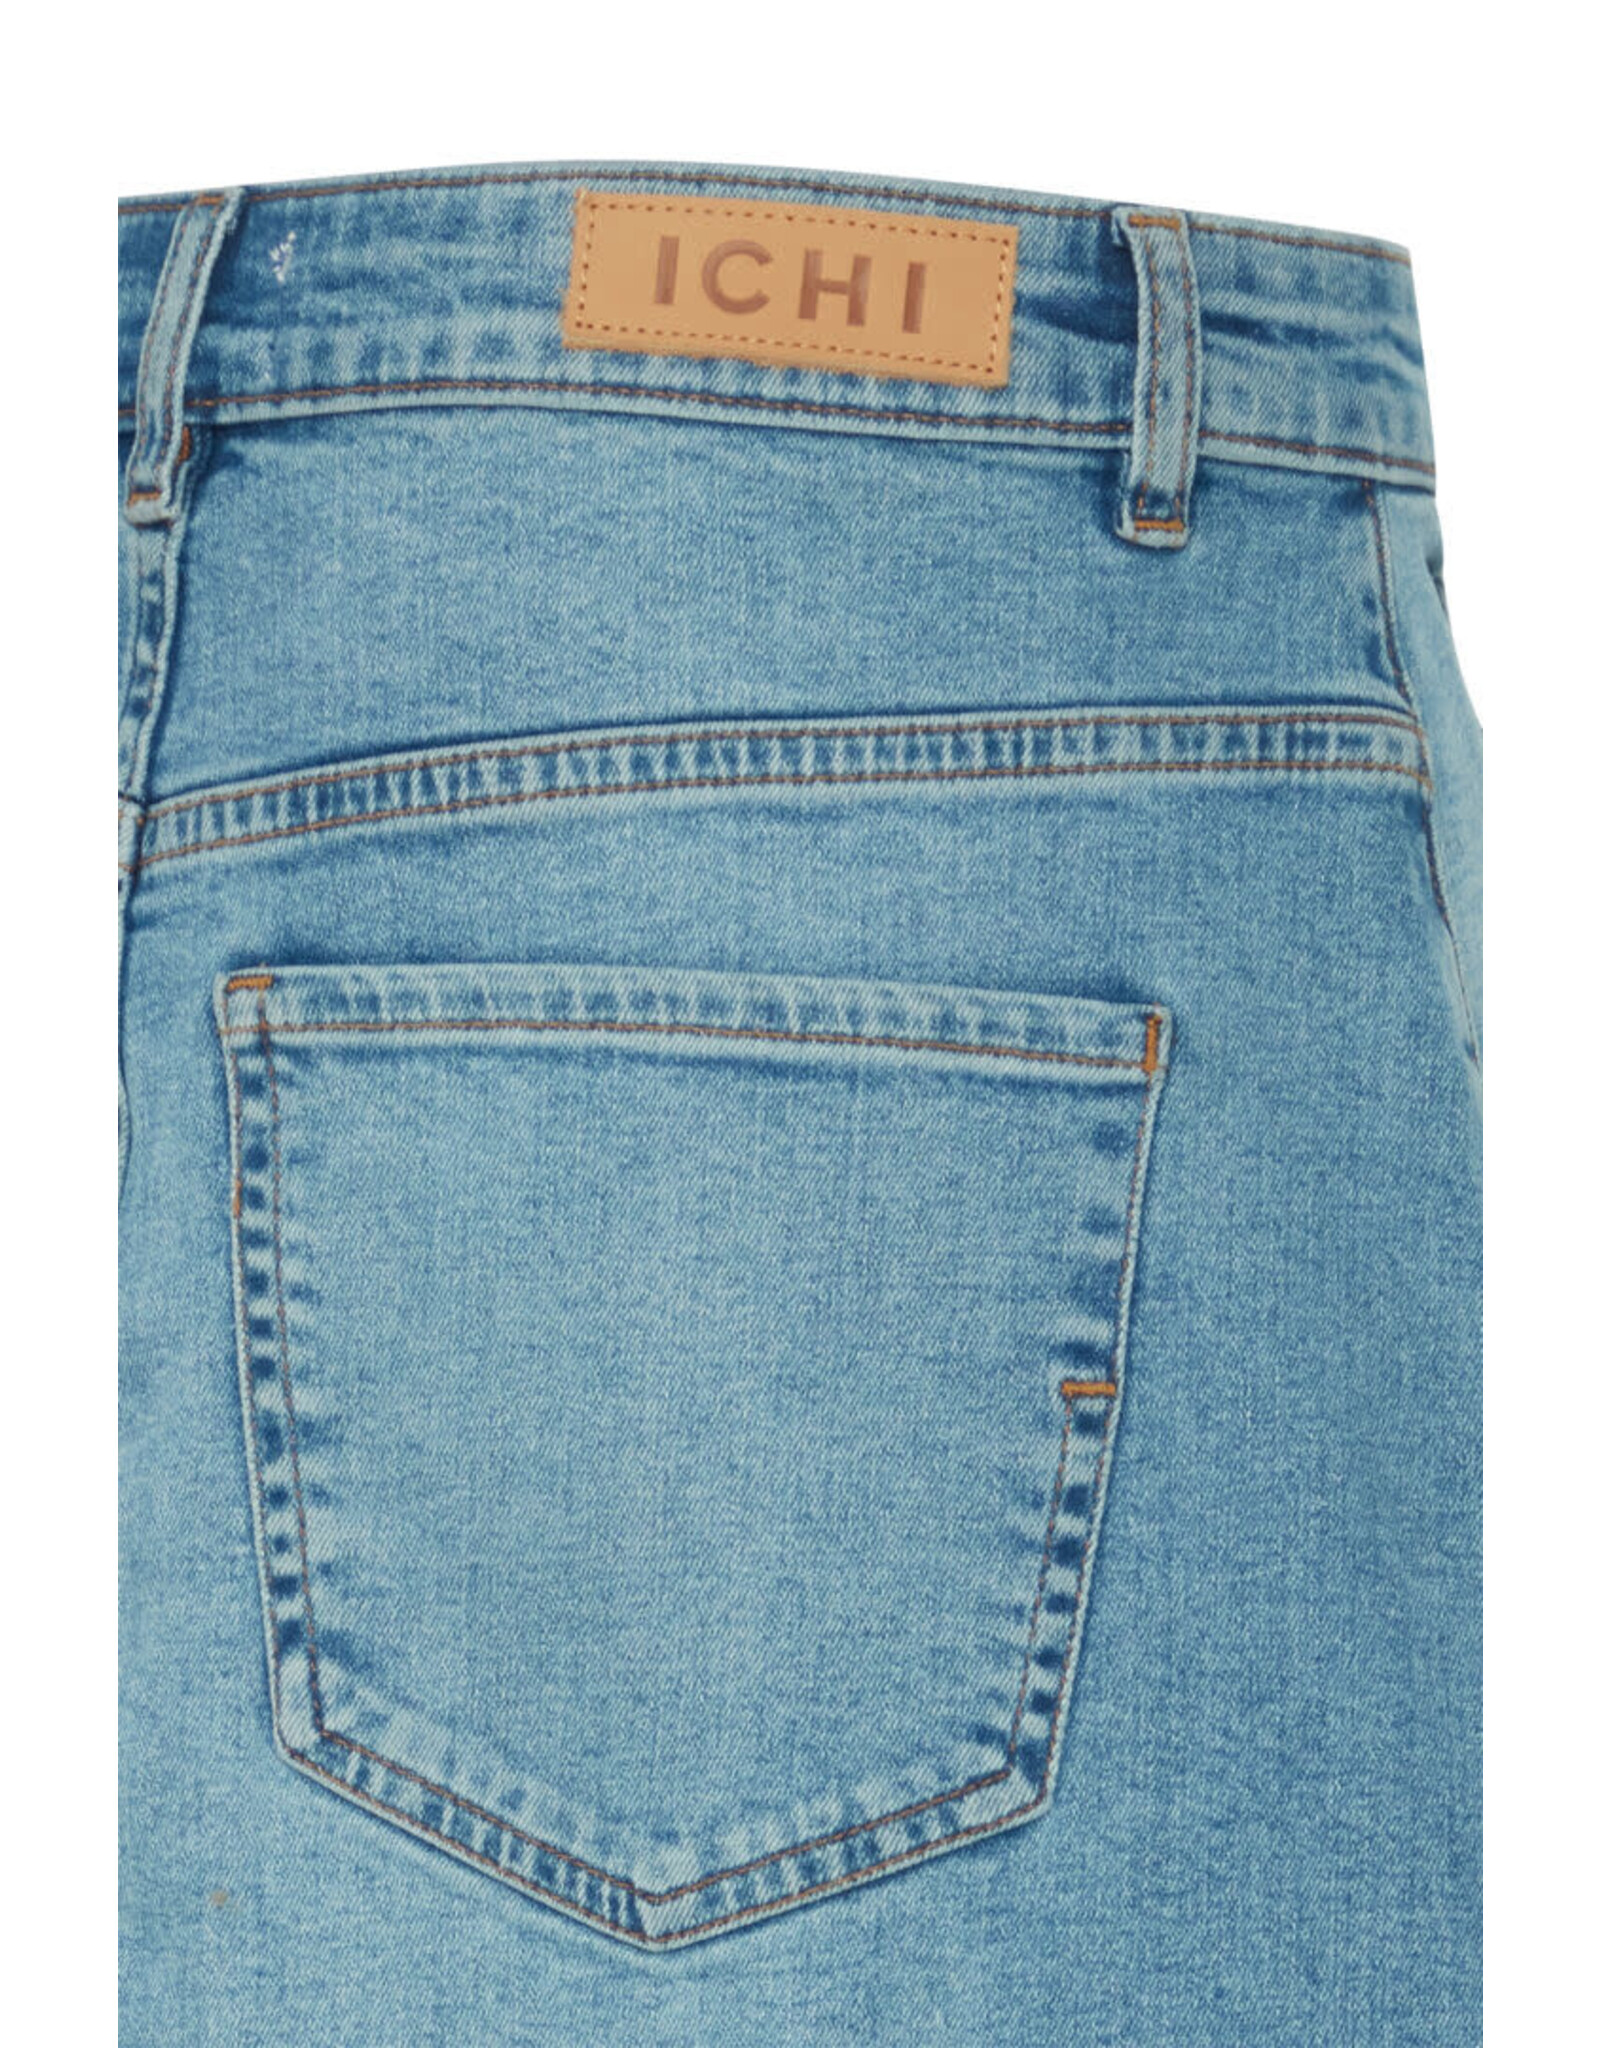 ICHI ICHI - Twiggy Denim Skirt (Light Blue Wash)